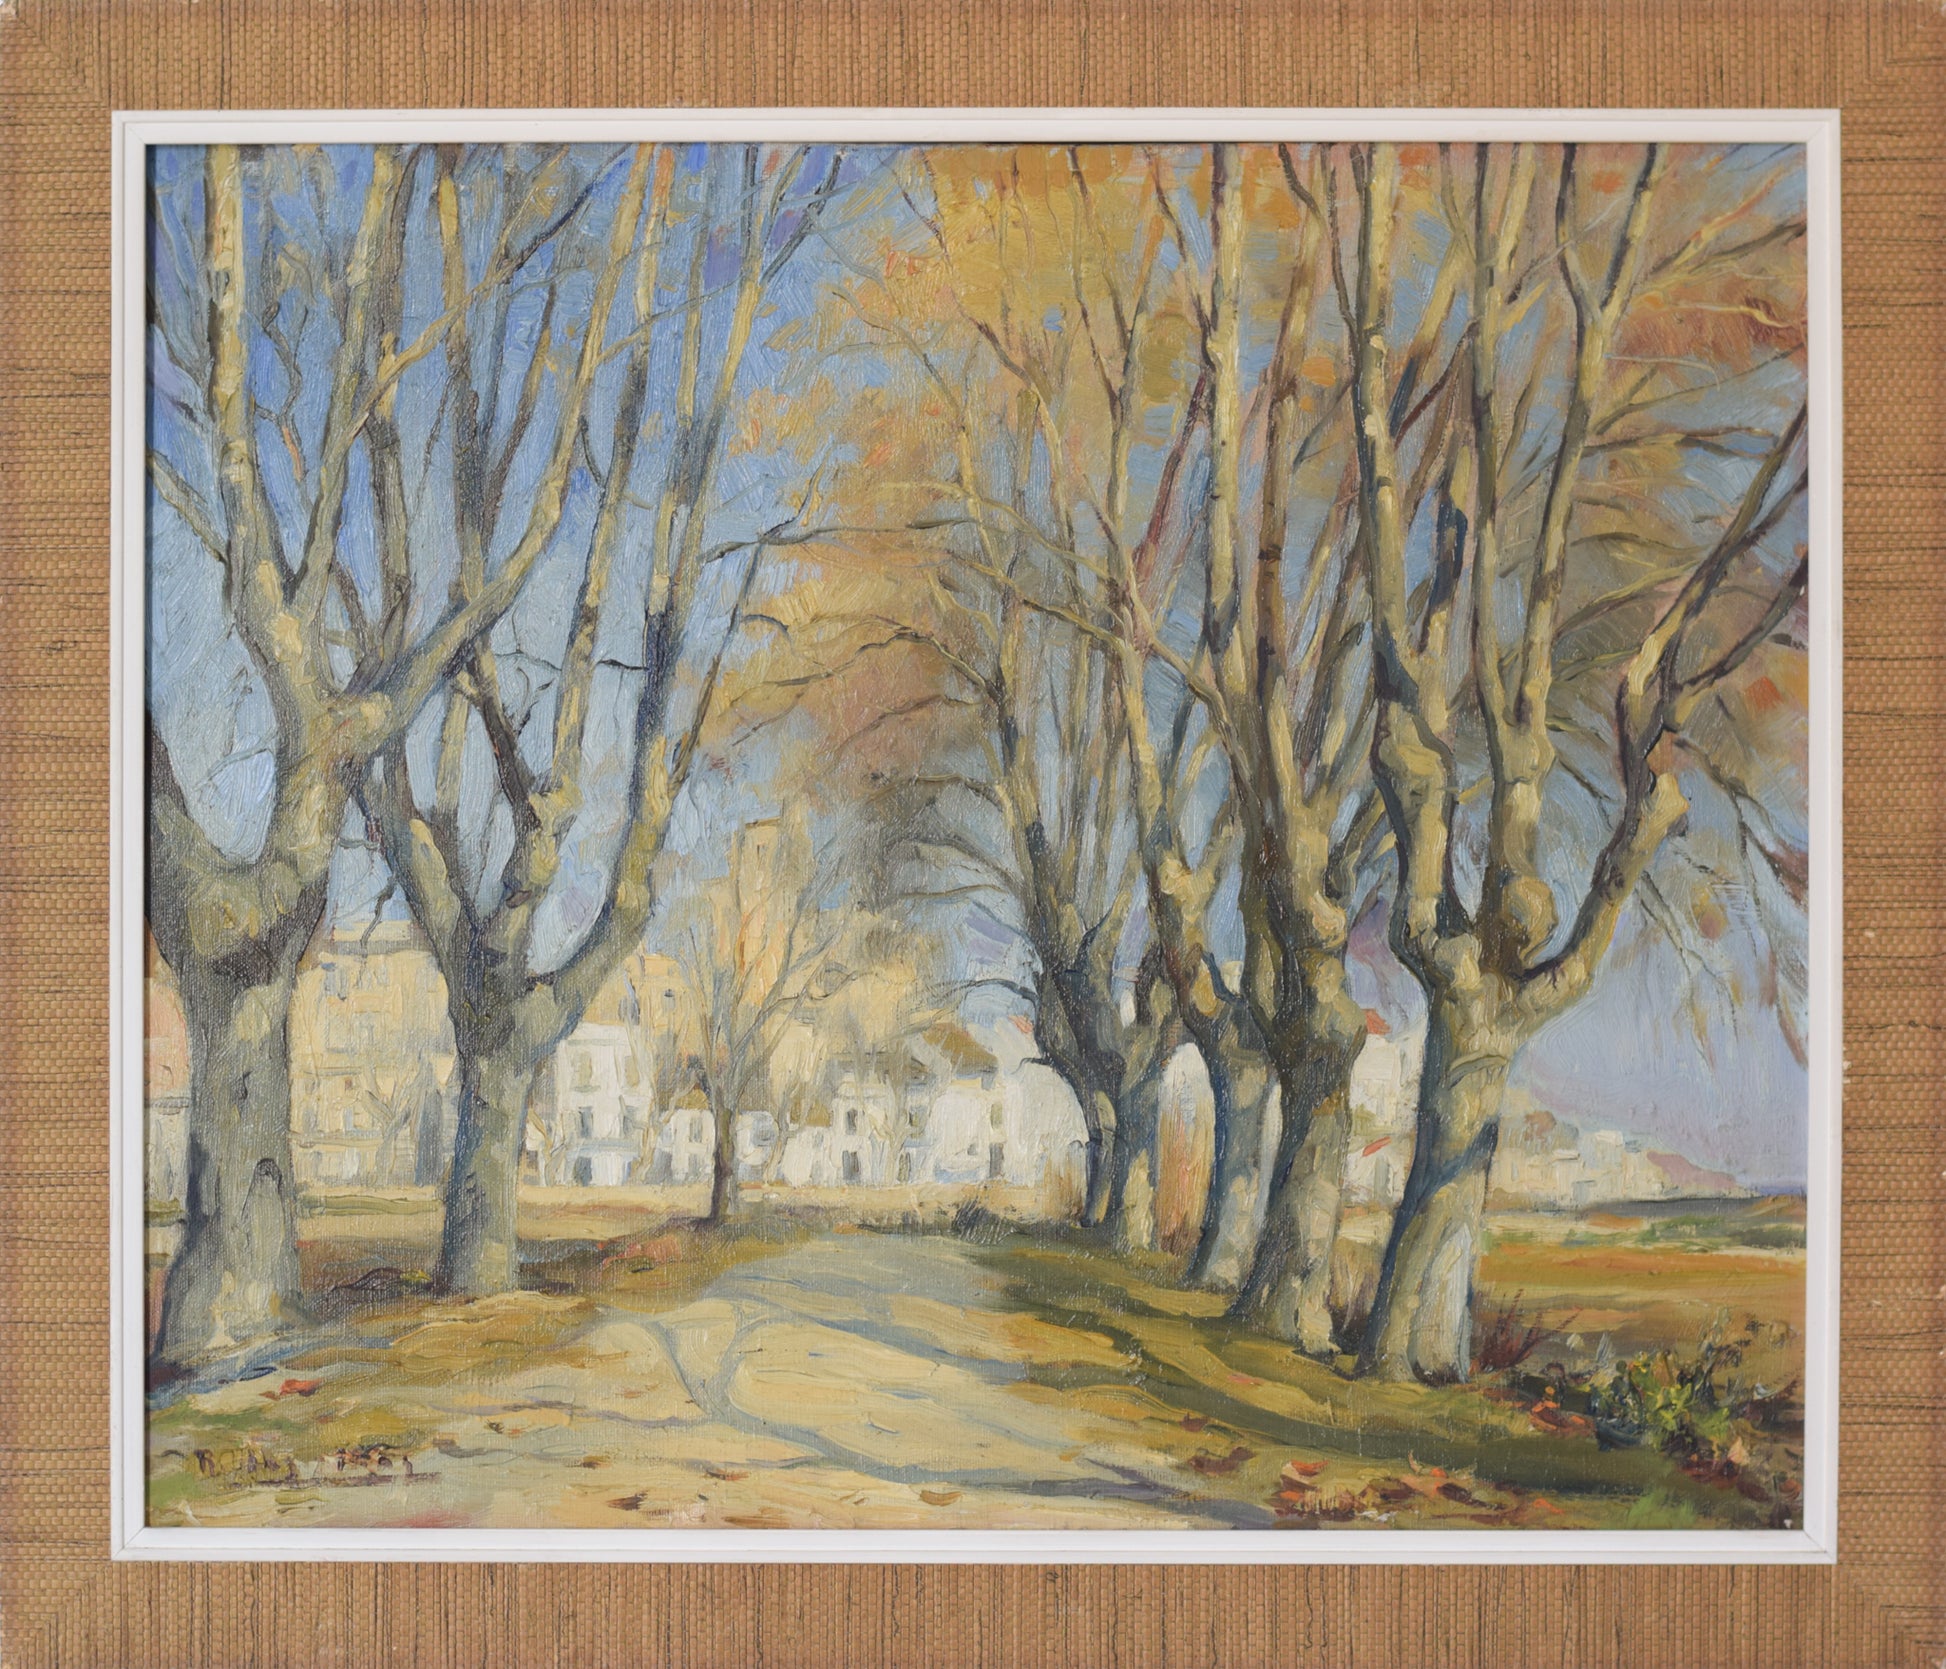 Impressionist Landscape with a Tree-lined Lane_Framed